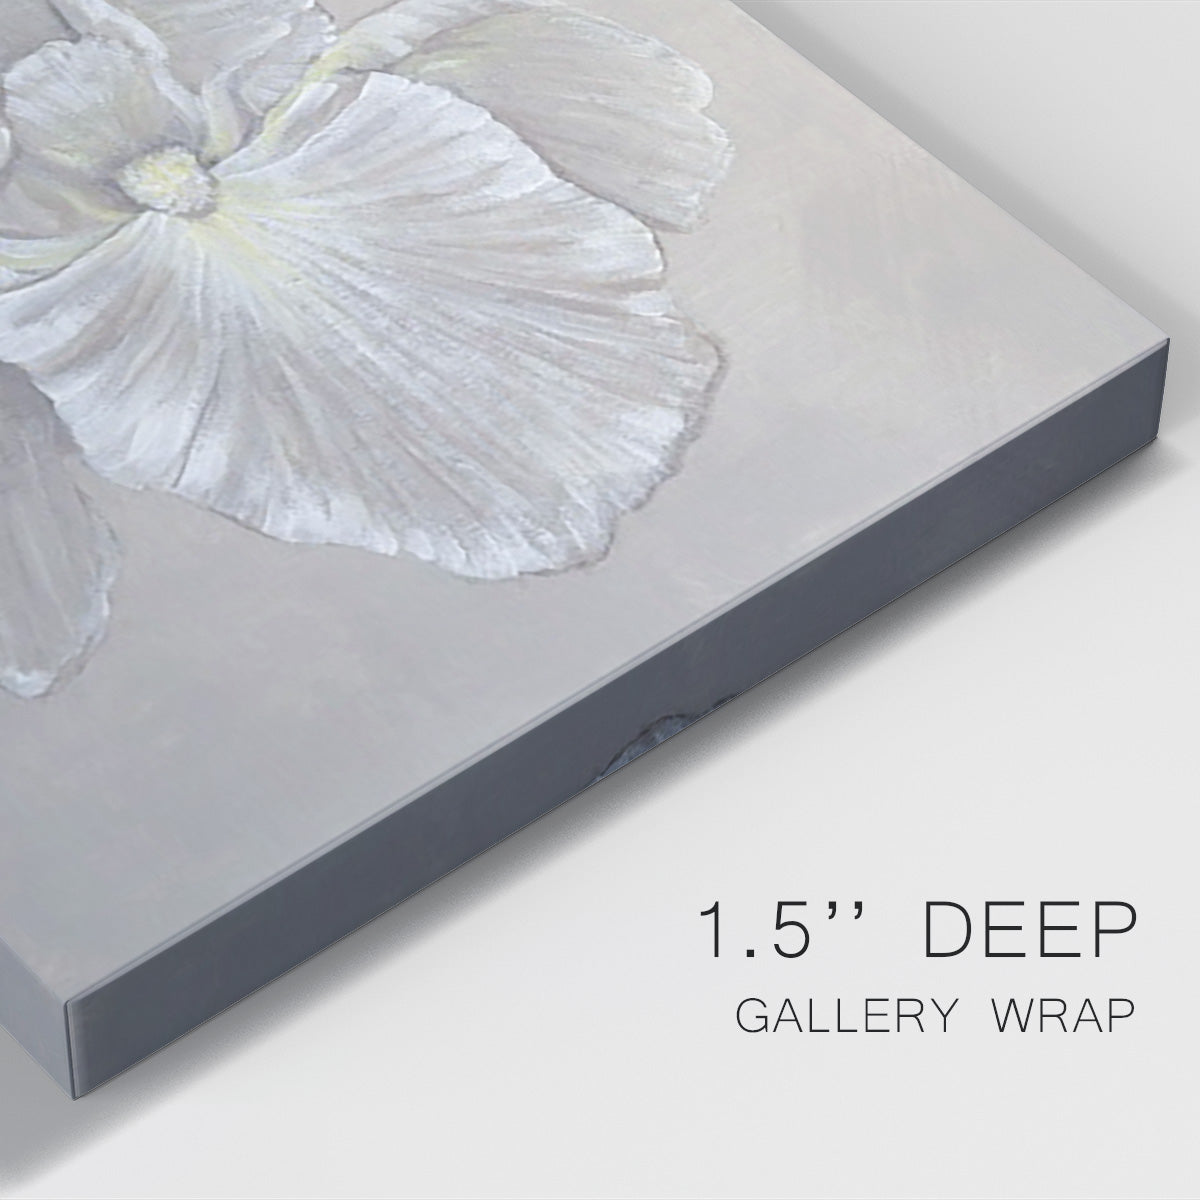 White Iris II Premium Gallery Wrapped Canvas - Ready to Hang